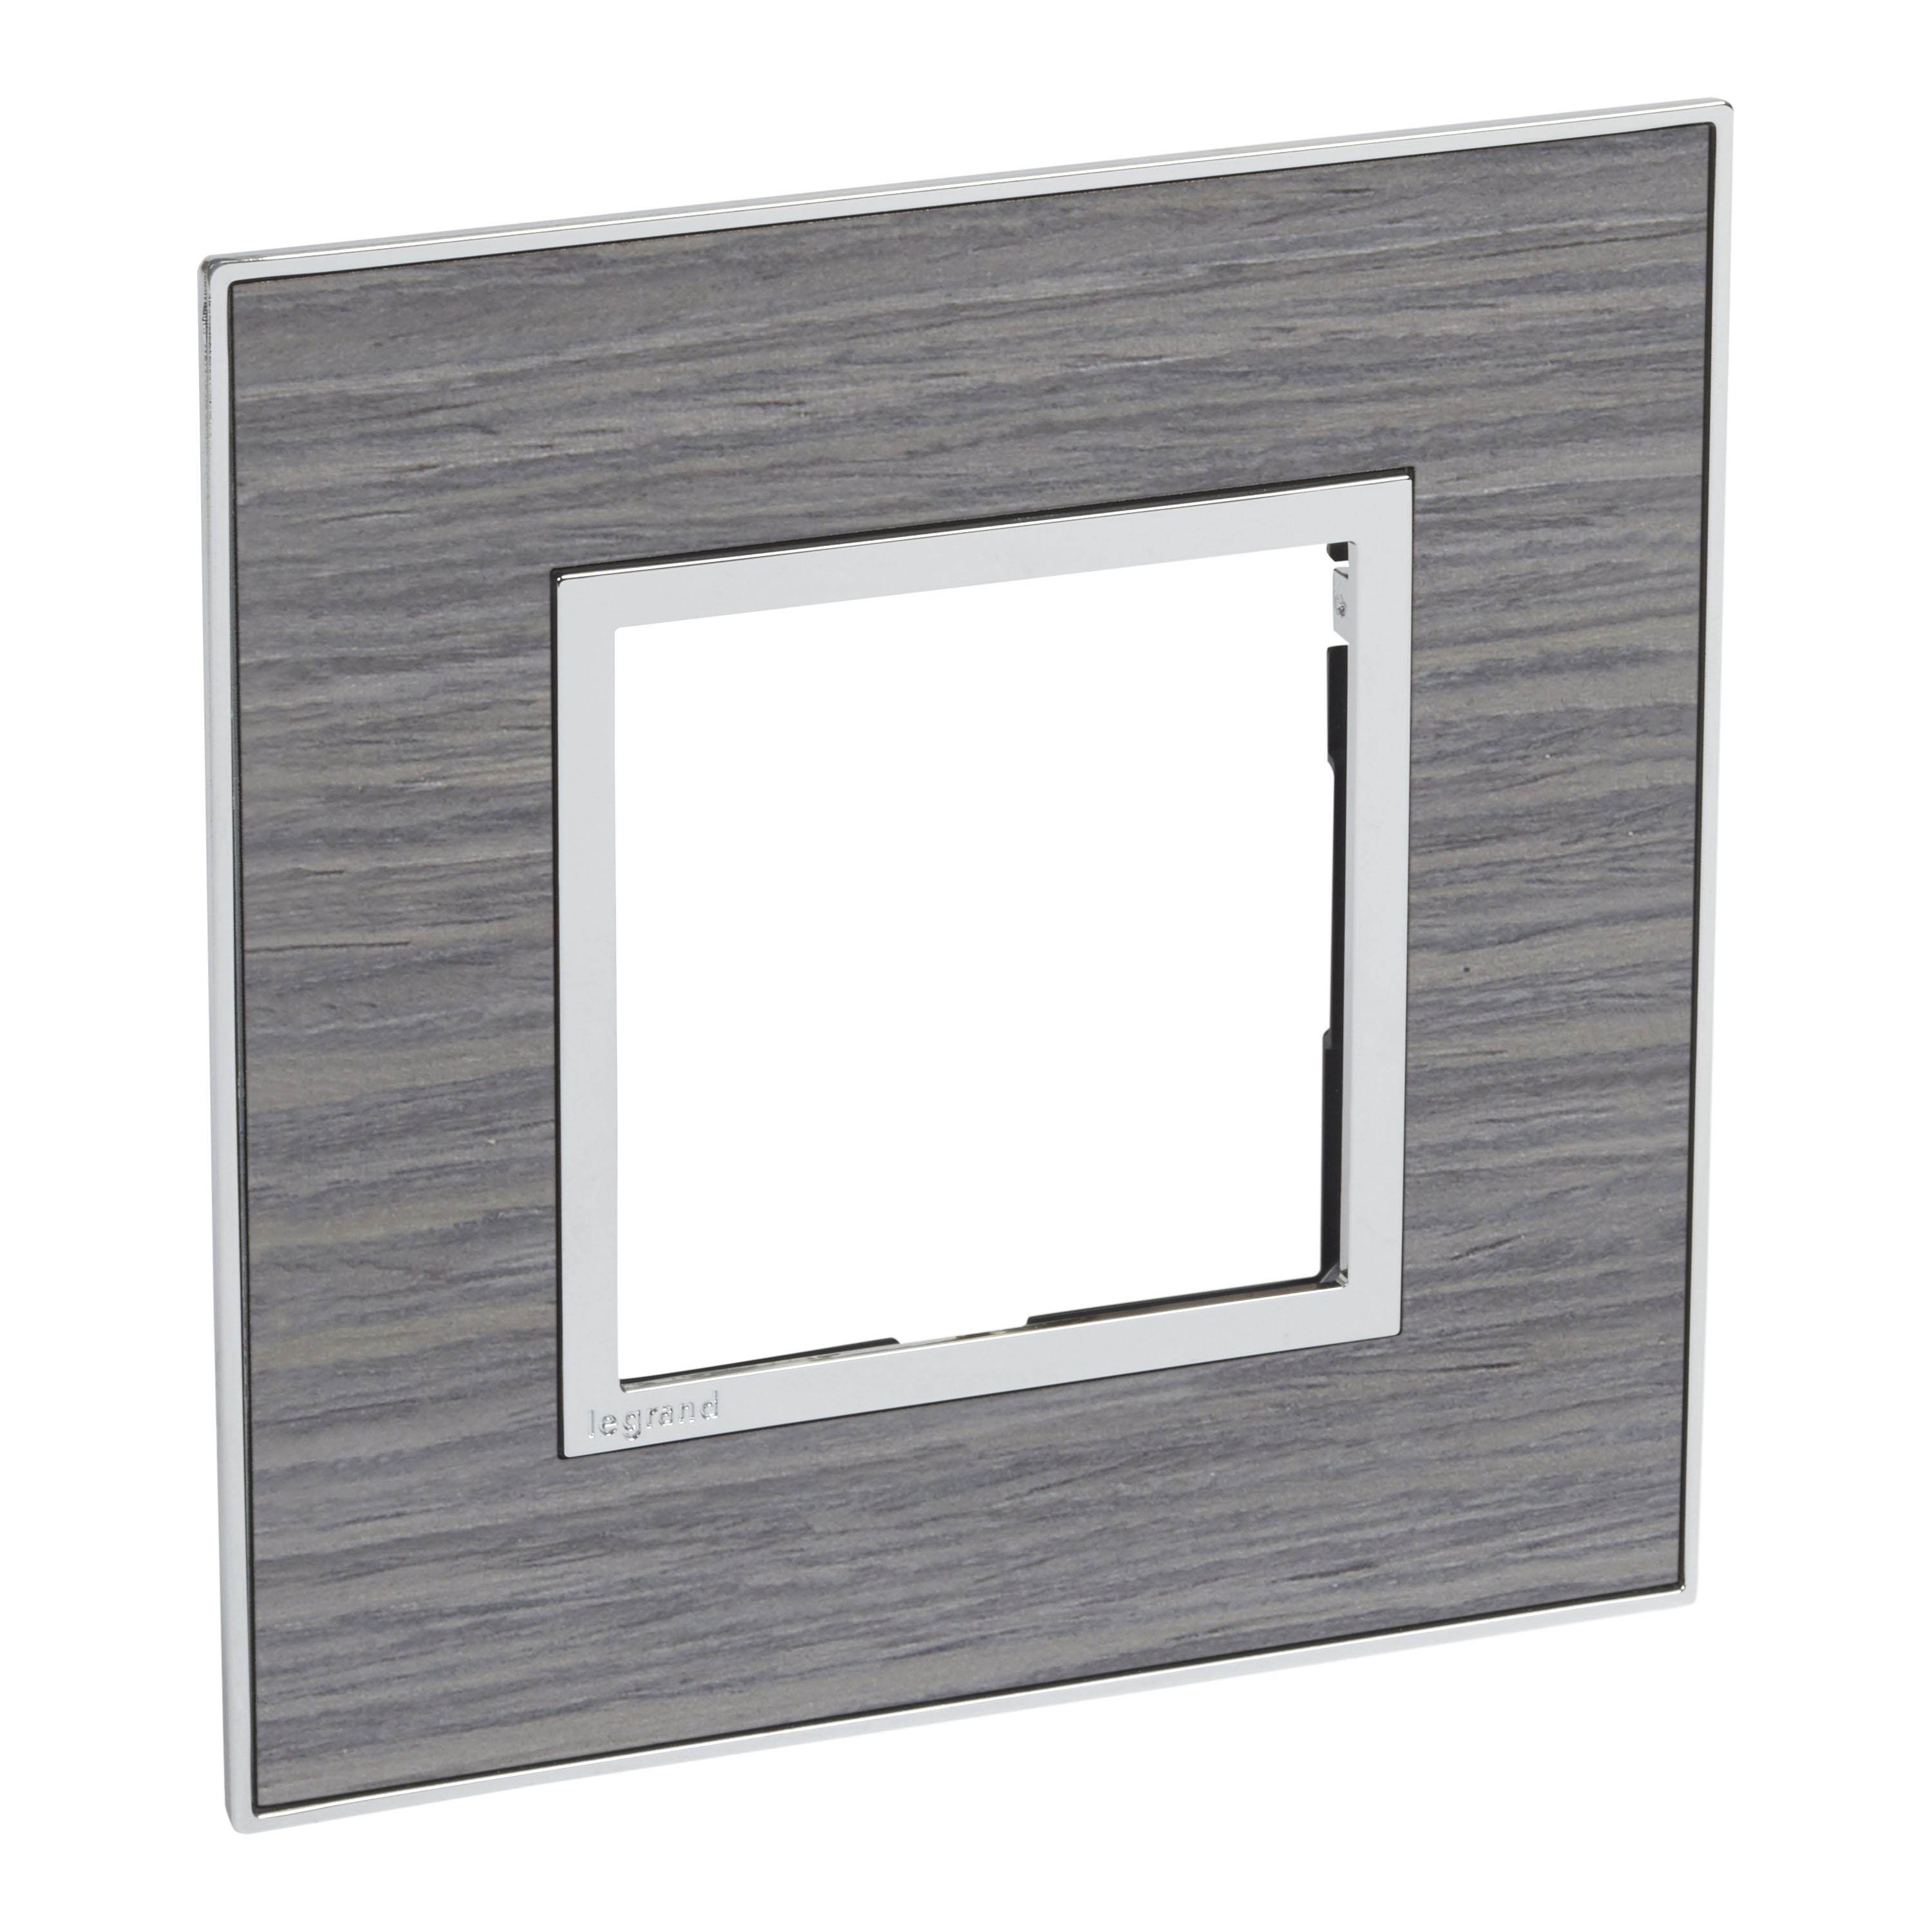 British standard plate Arteor square version 2 modules - wood grey oak, 571392, 3414971244467